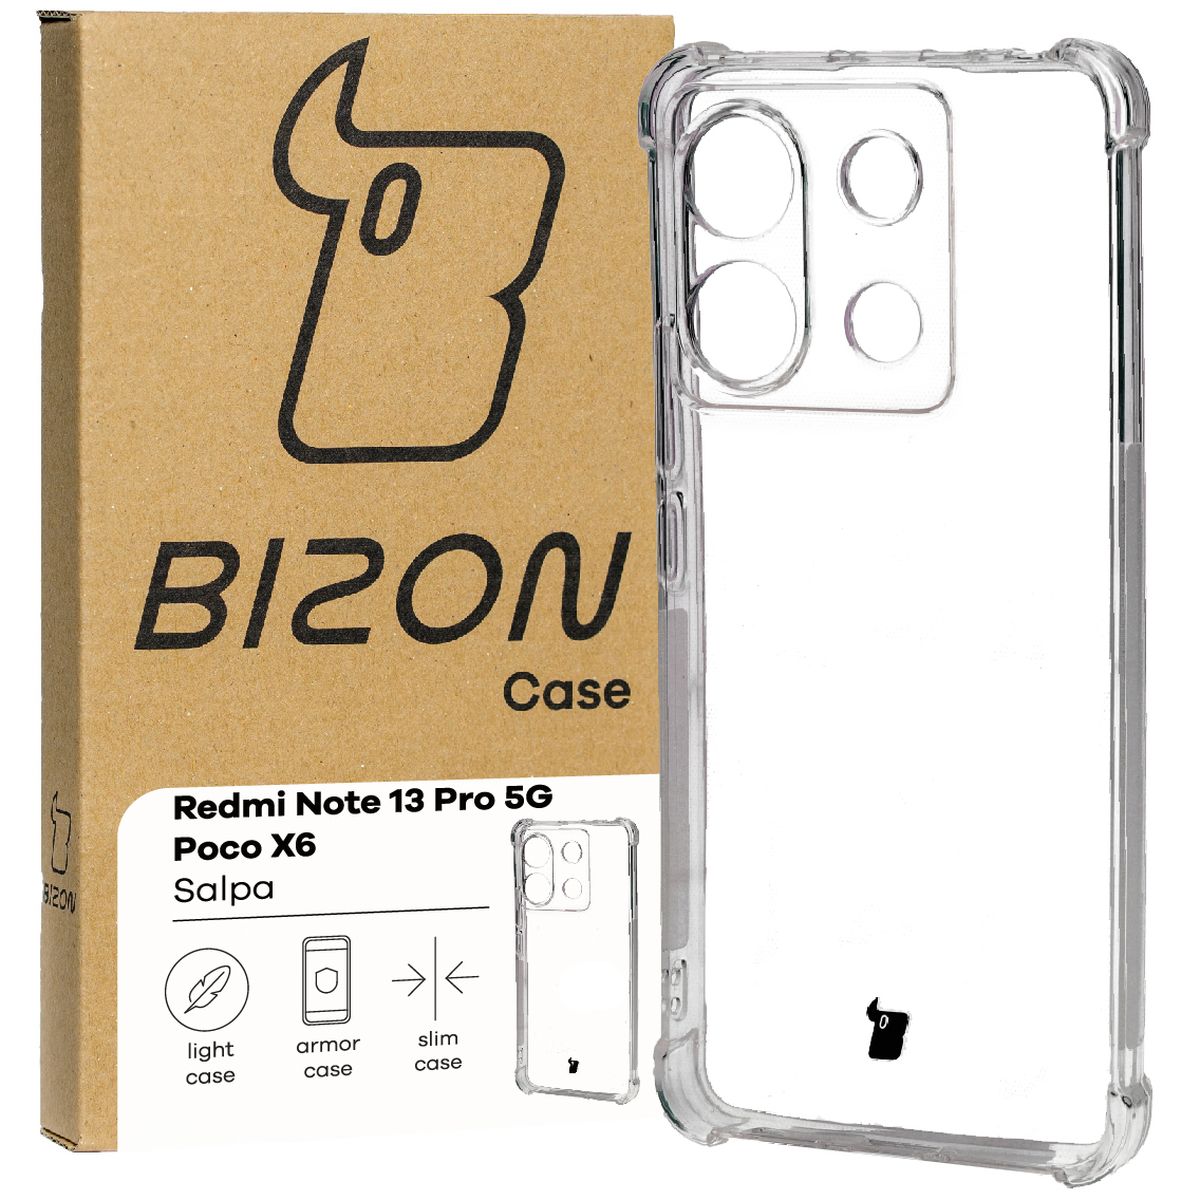 Flexible Schutzhülle für Xiaomi Pocophone X6 / Xiaomi Redmi Note 13 Pro 5G, Bizon Case Salpa, Transparent